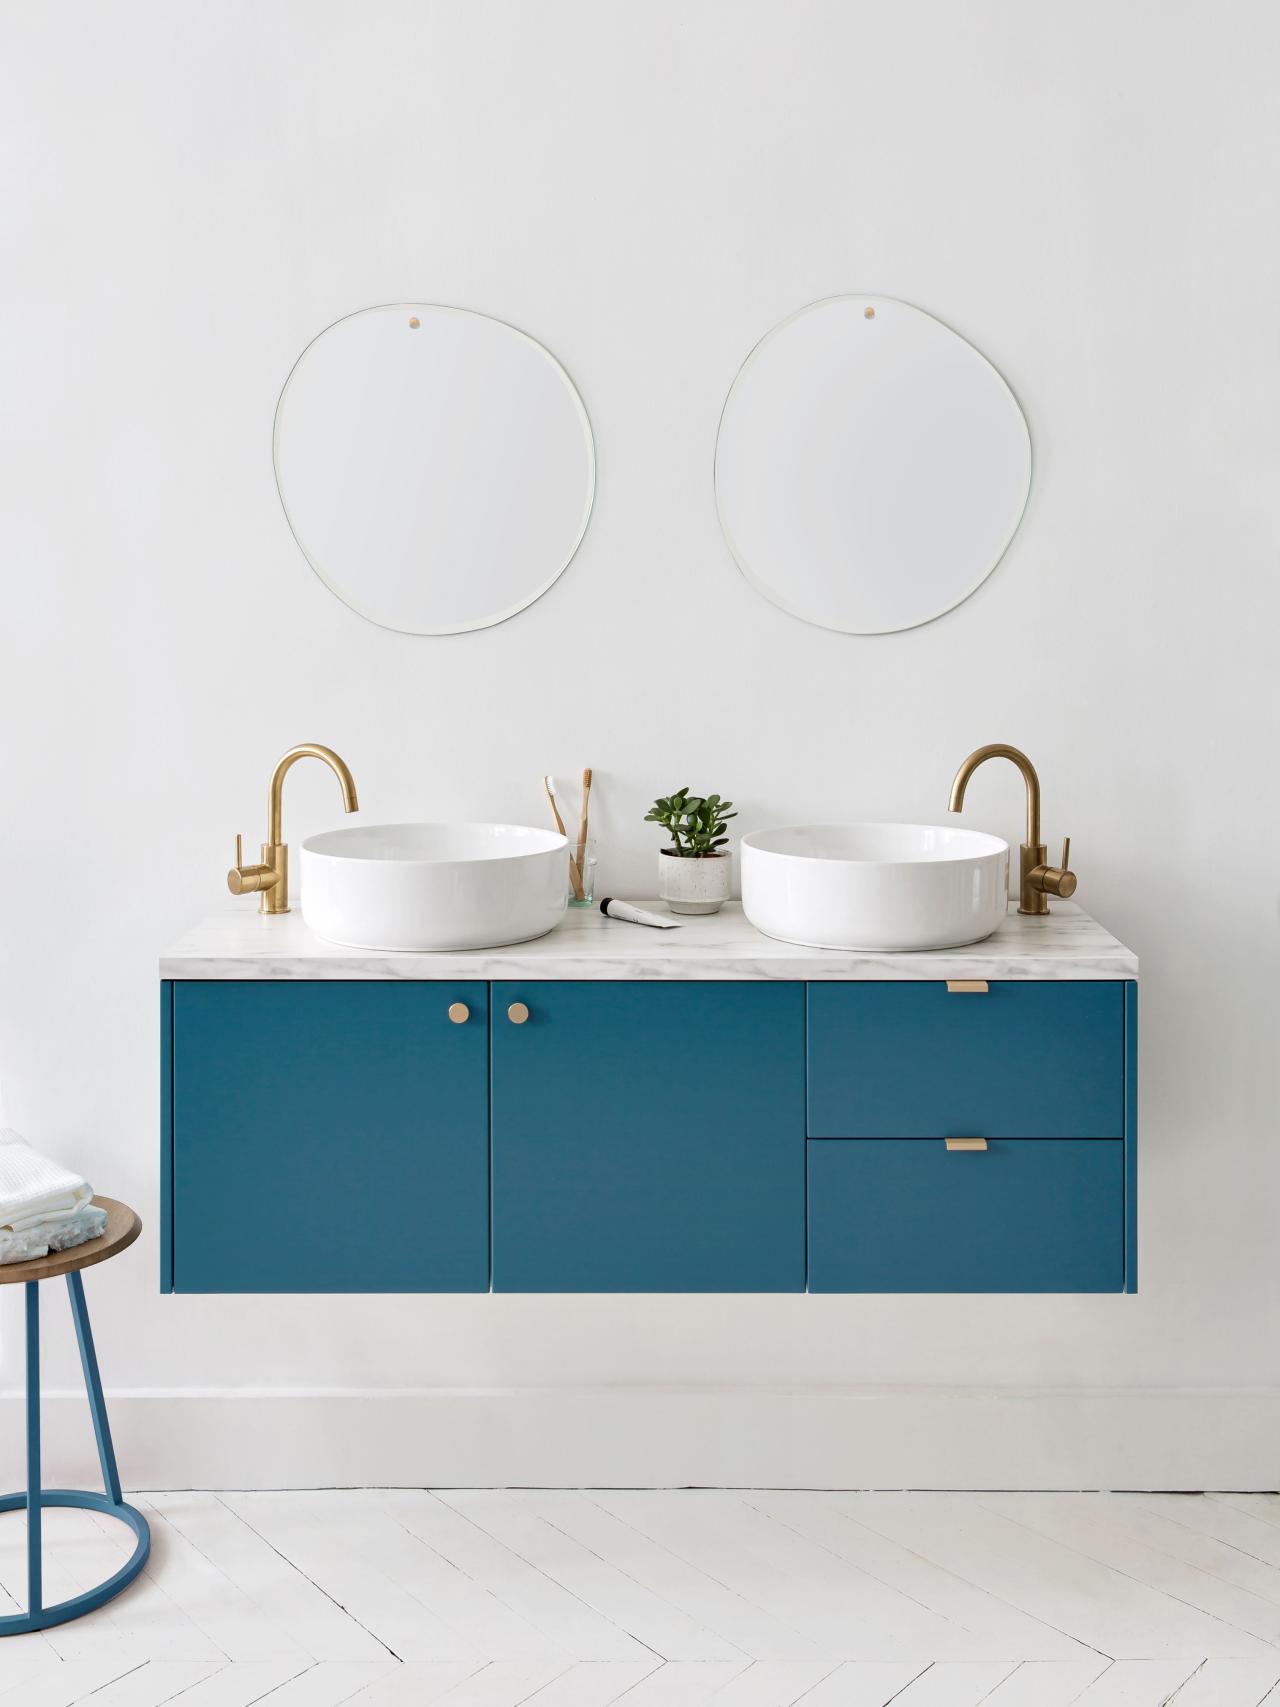 A Blue lagon bathroom furniture